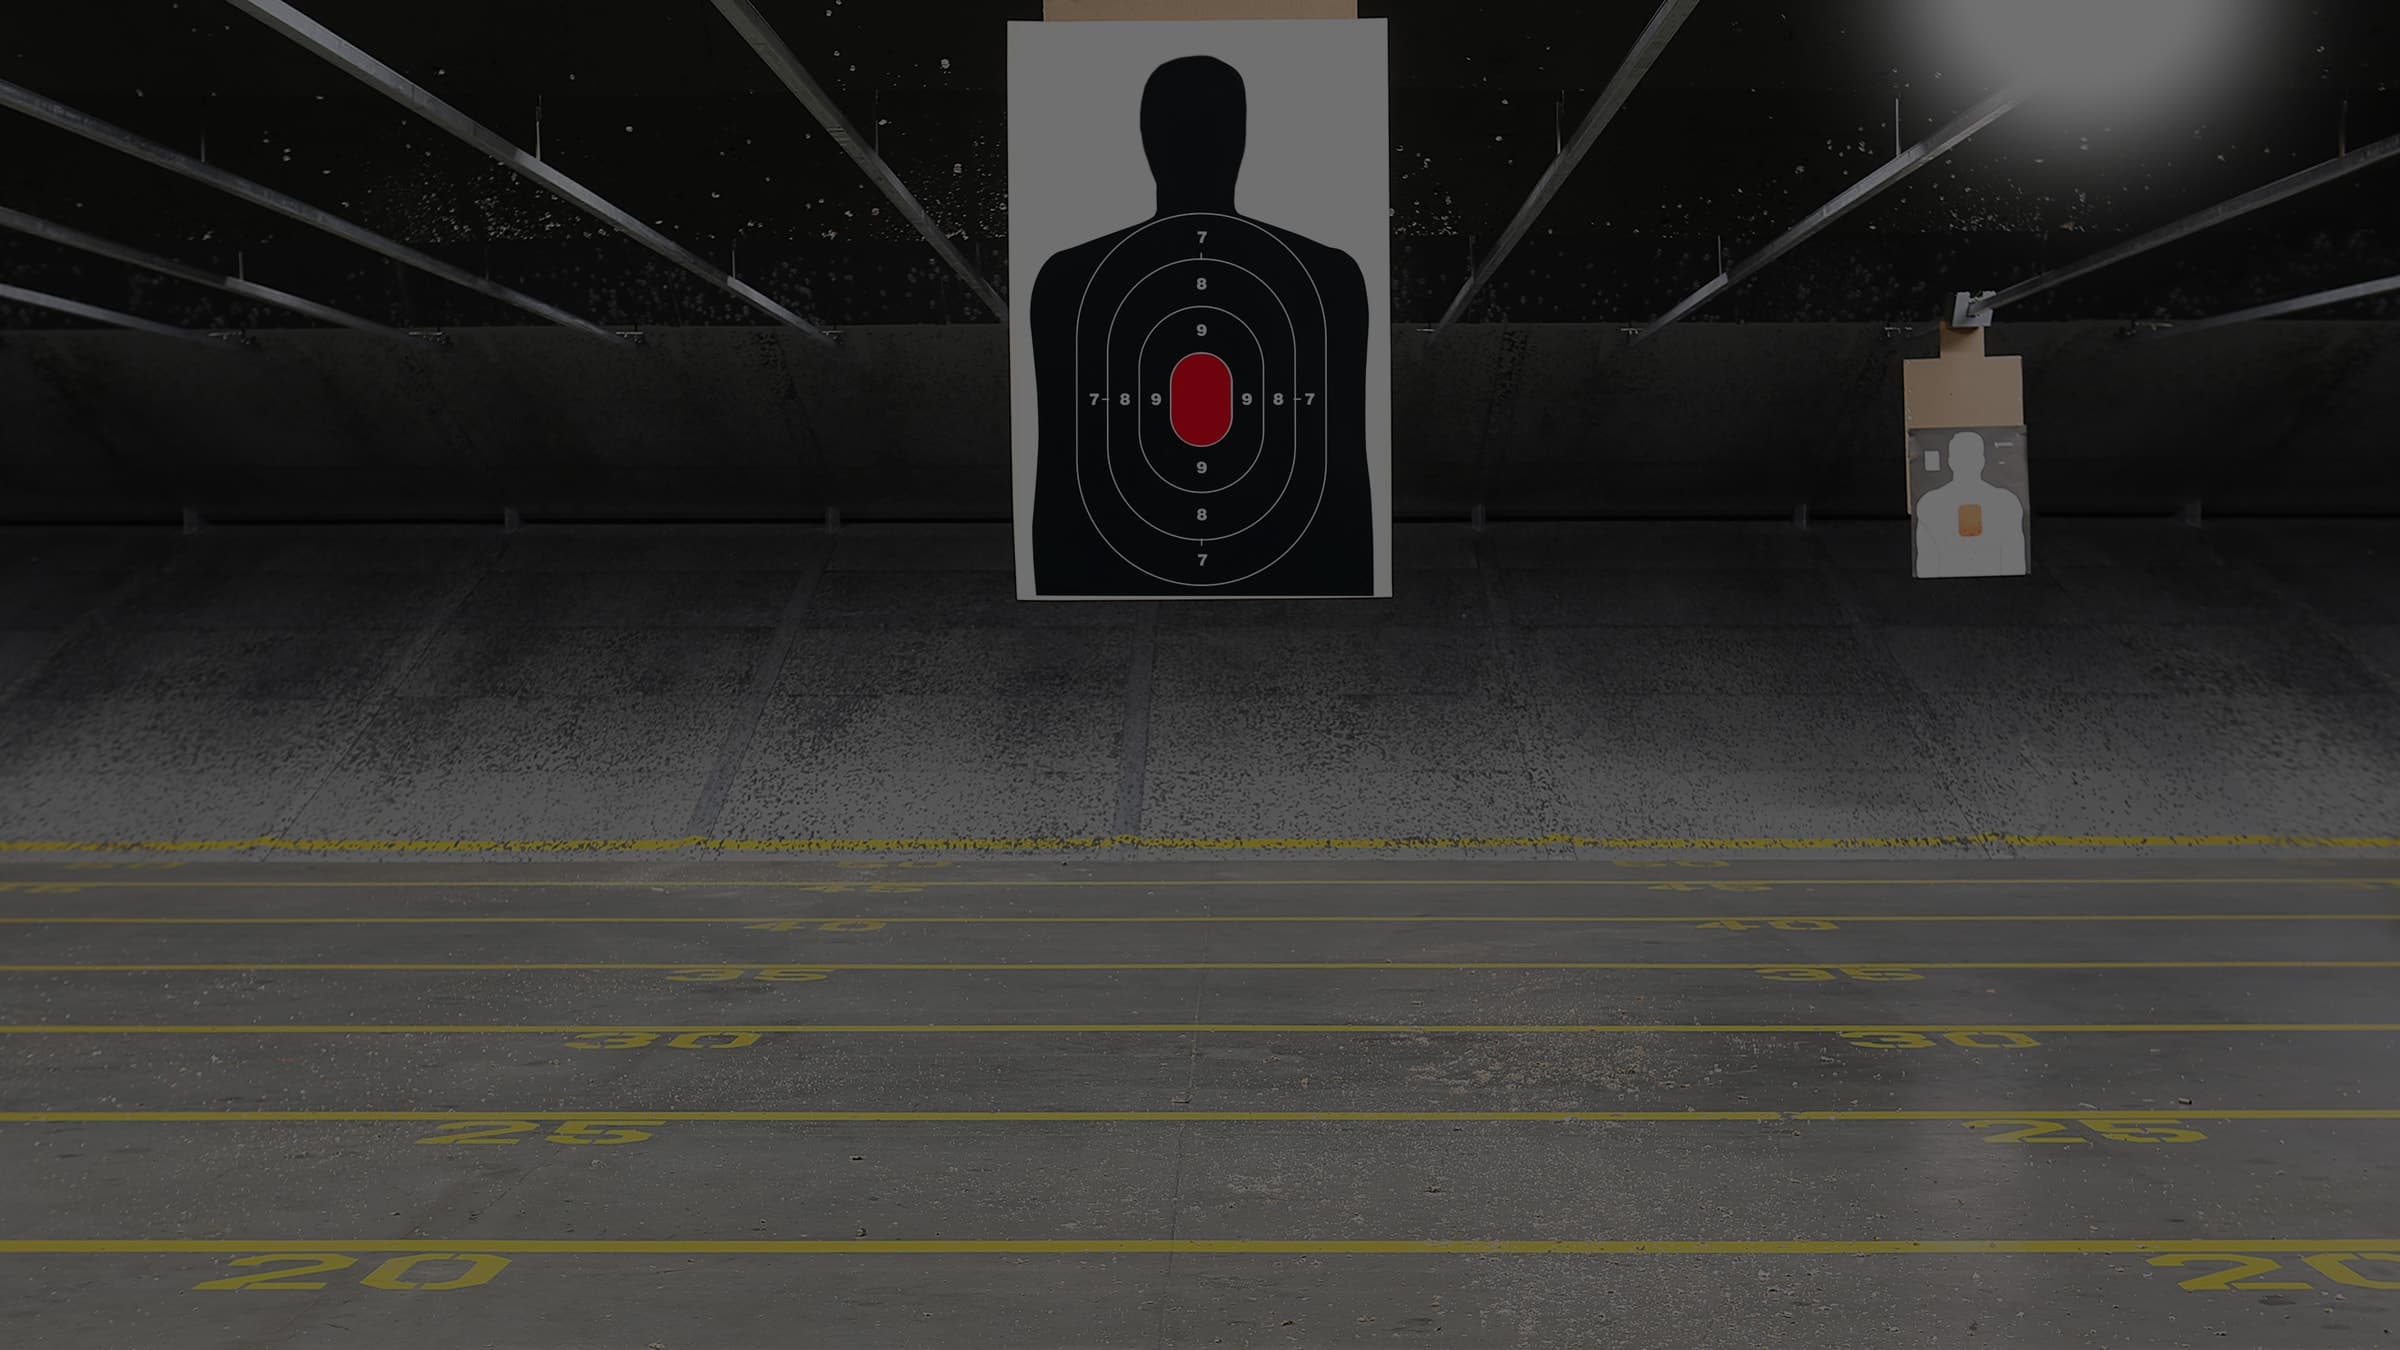 Nexus Shooting - State of the Art Indoor Shooting Range and Firearms Retail  - What's your favorite target on the @nexusshooting digital lanes ? The  Nexus Star keeps it interesting ! #Repost @bit_the_bullet  #RealGunRealAmmoRealFun